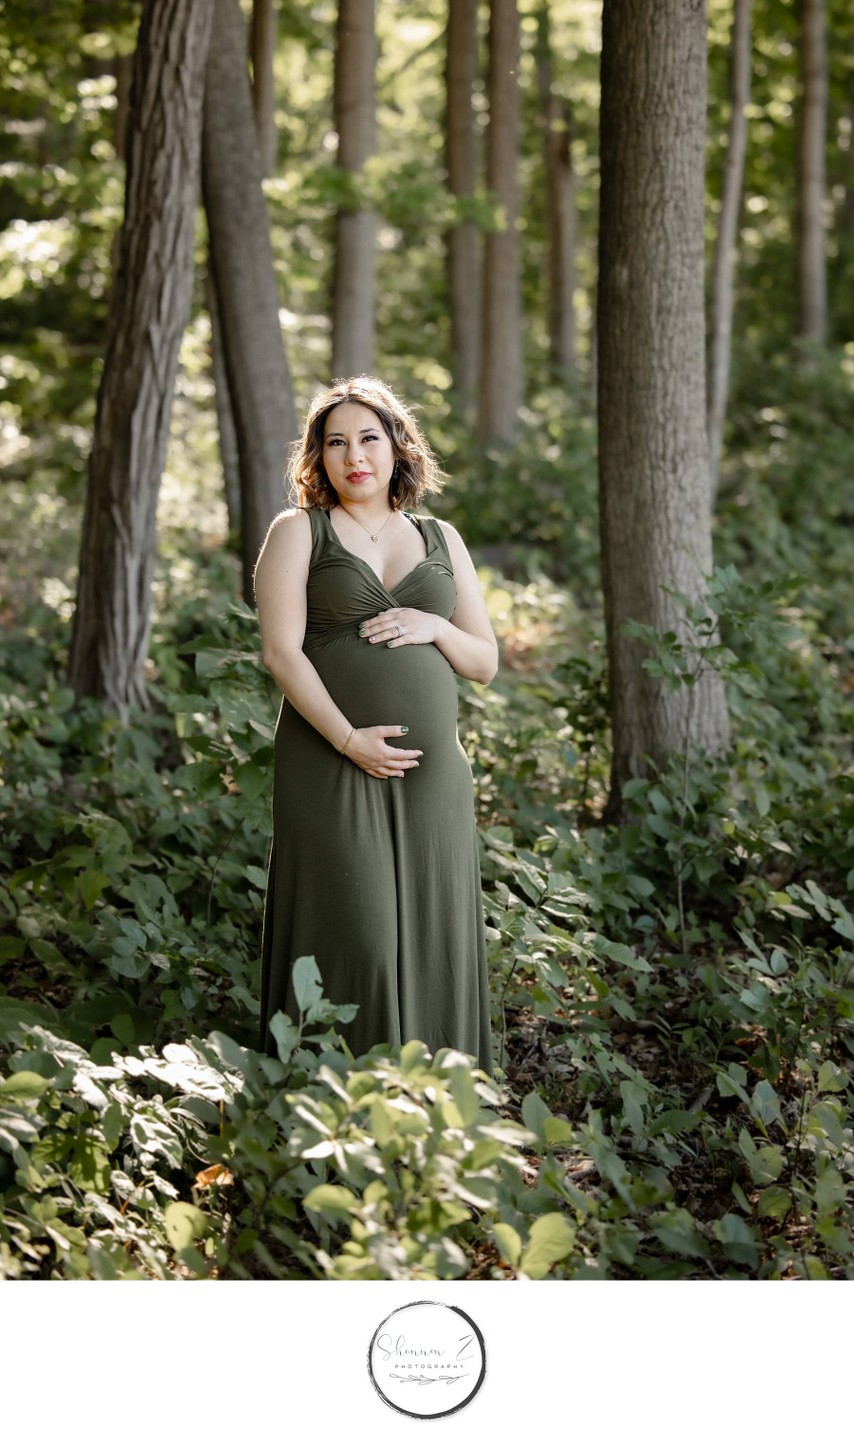 Baby Forest: Kenosha Maternity